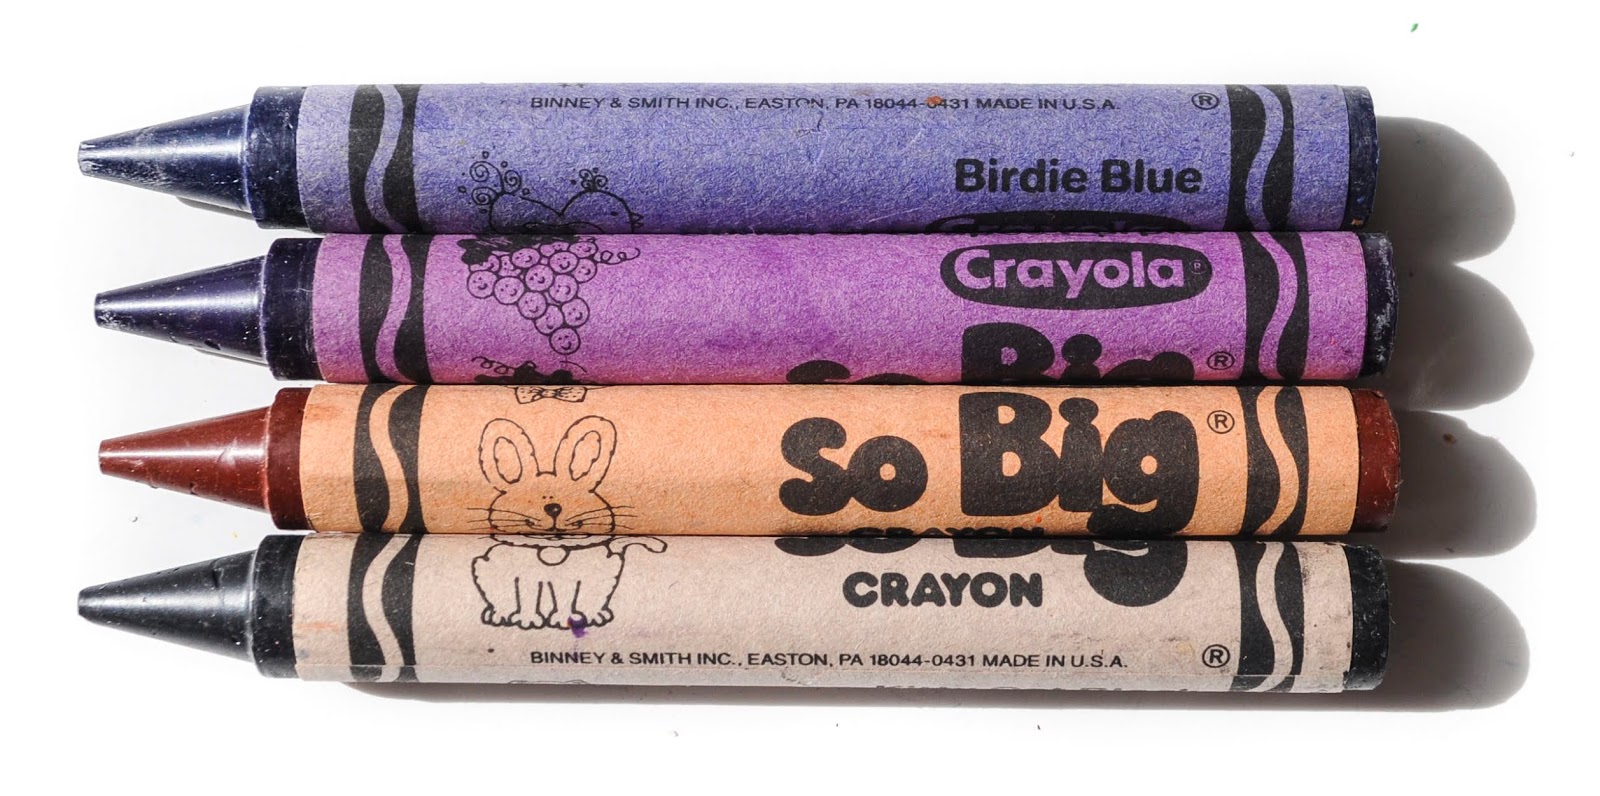 Giant Blue Crayon